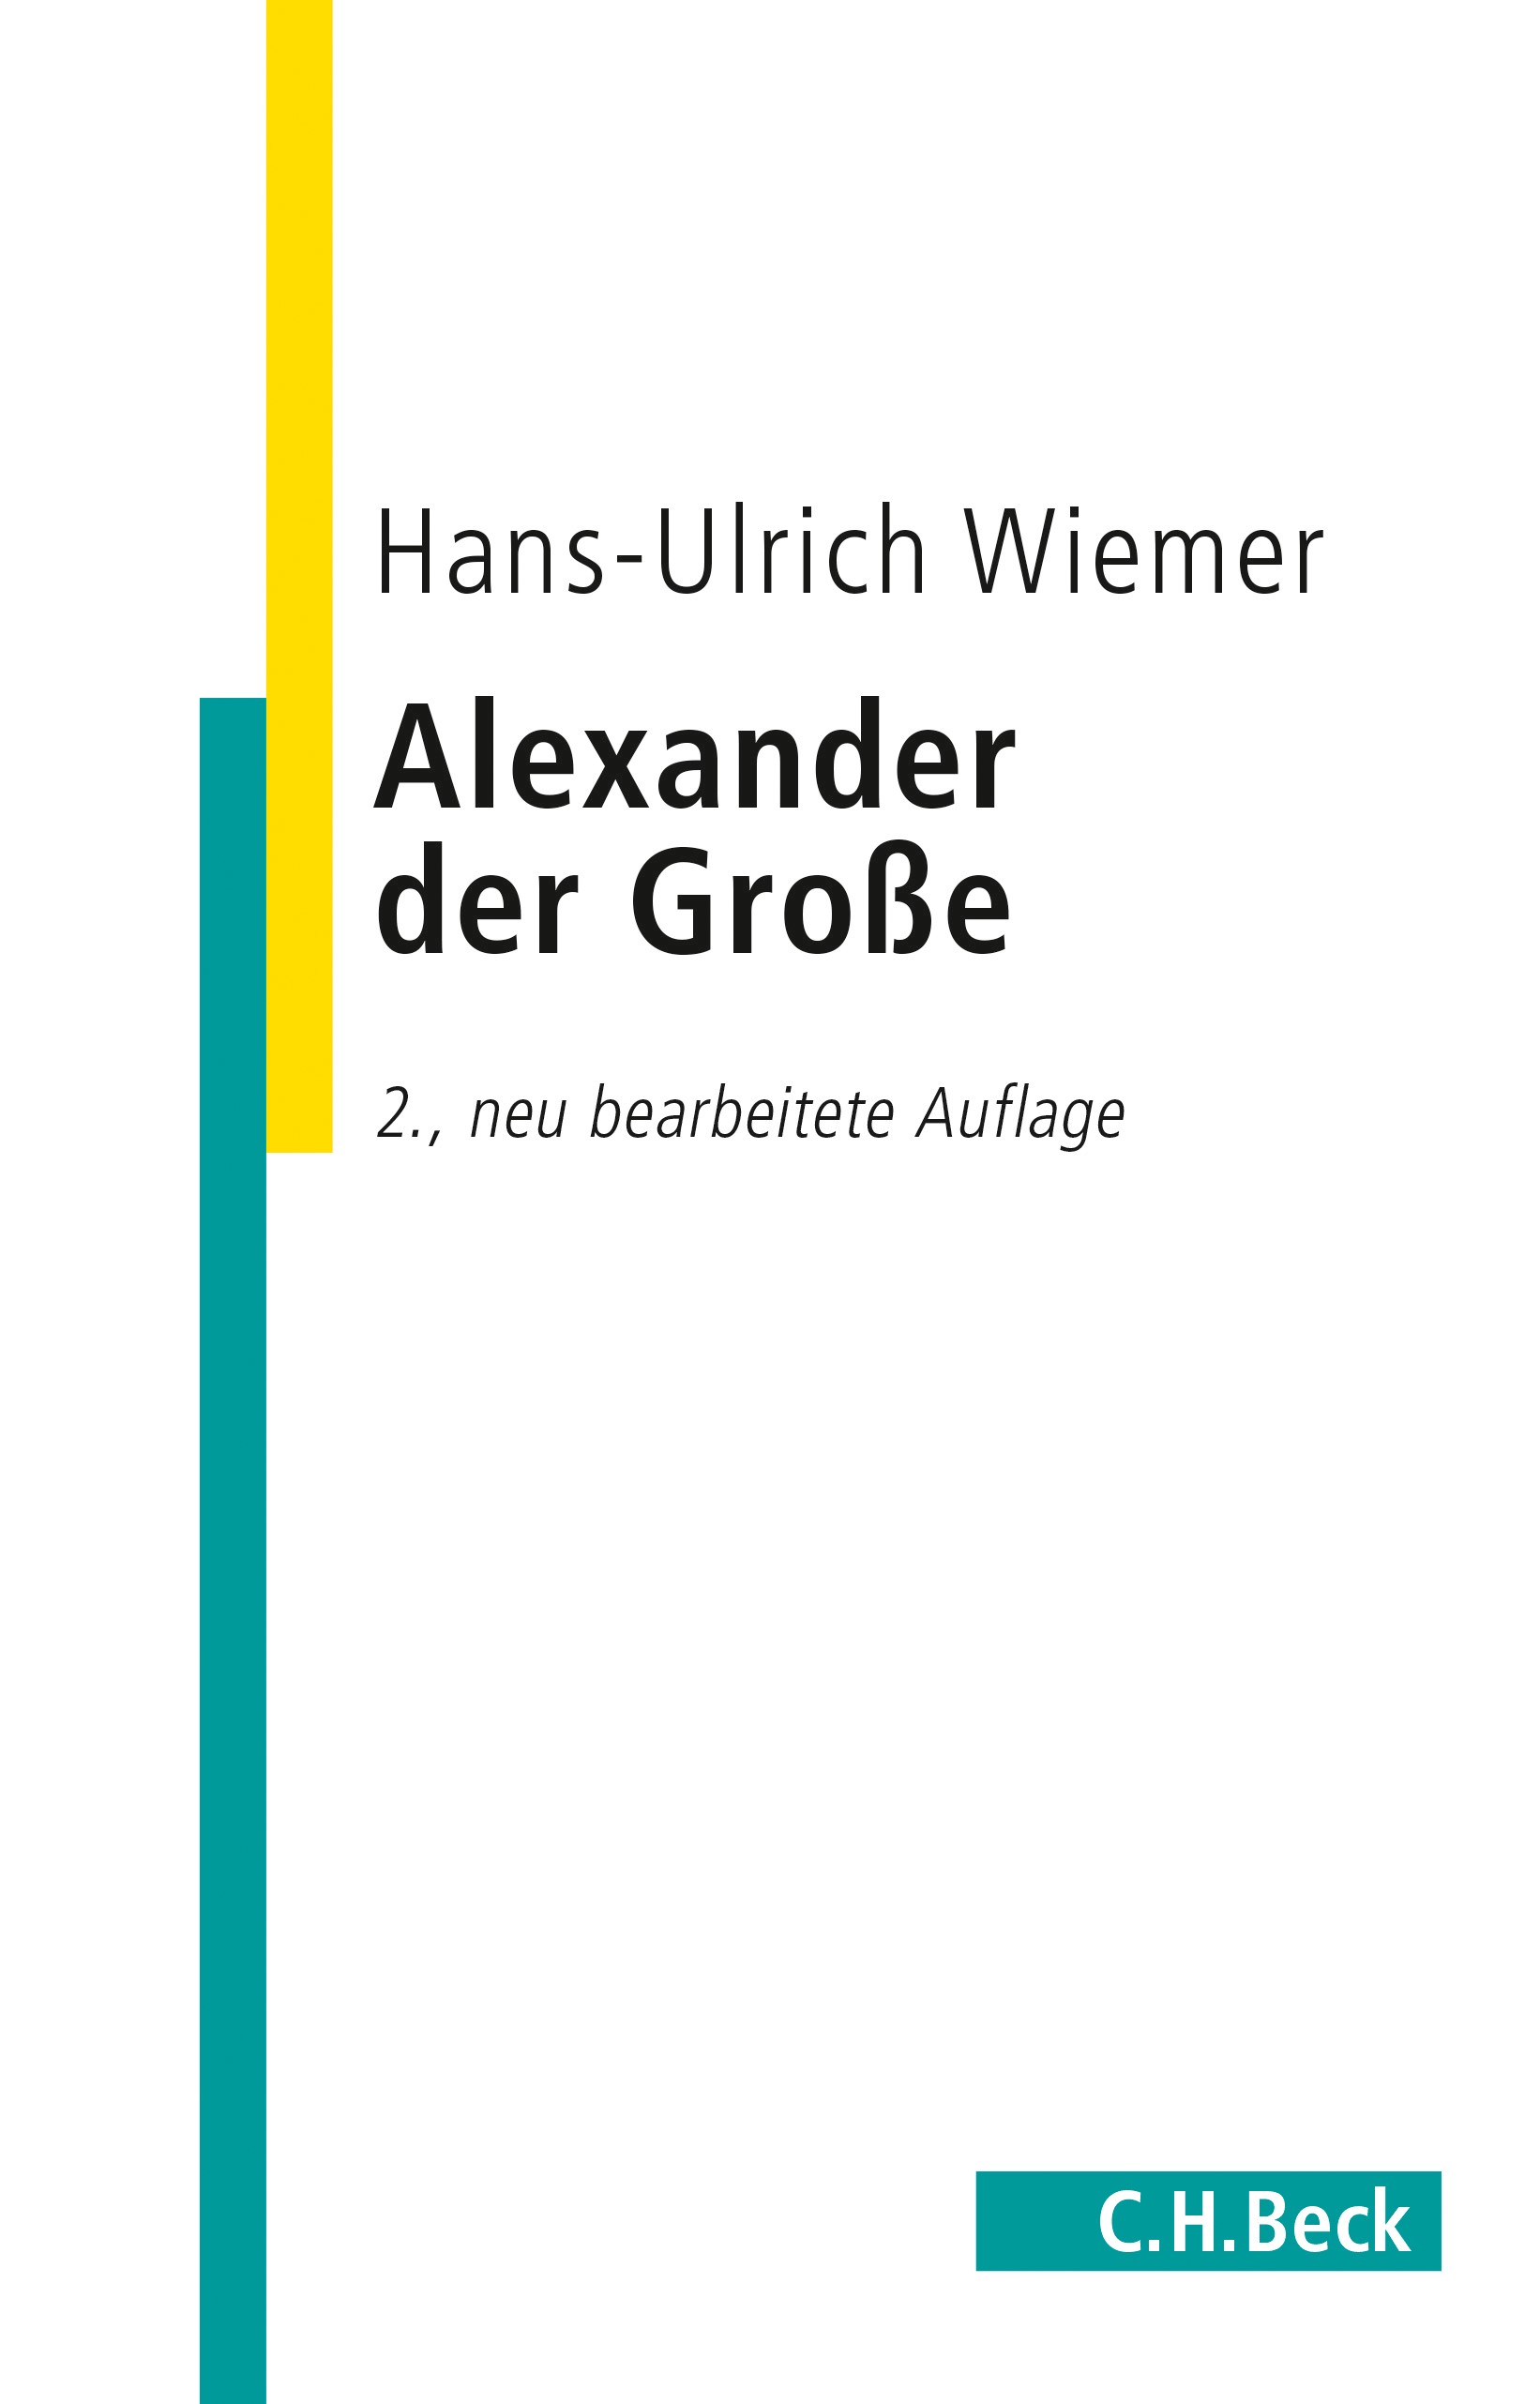 Cover: Wiemer, Hans-Ulrich, Alexander der Große